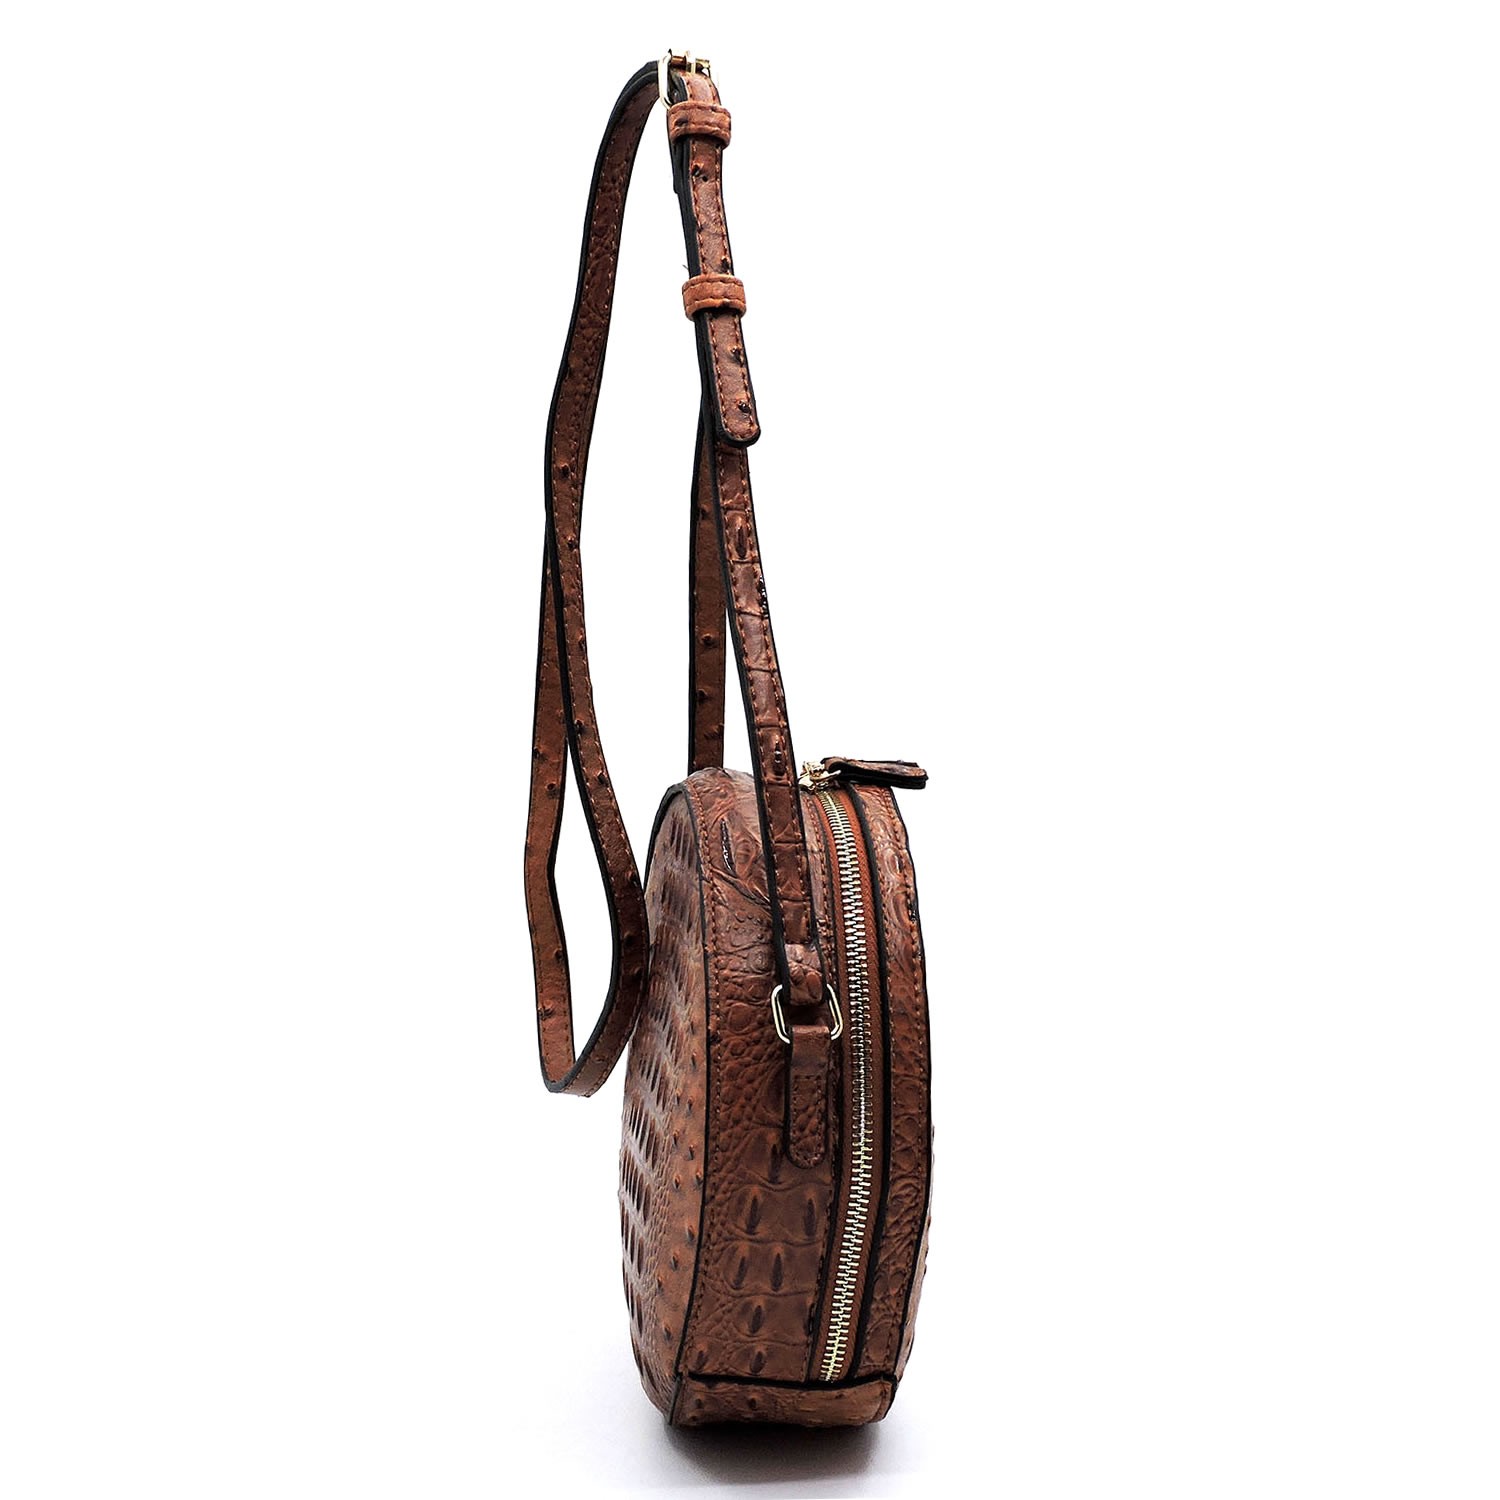 Ostrich Handbag Flapover Cross Body Bag with Bamboo Handle